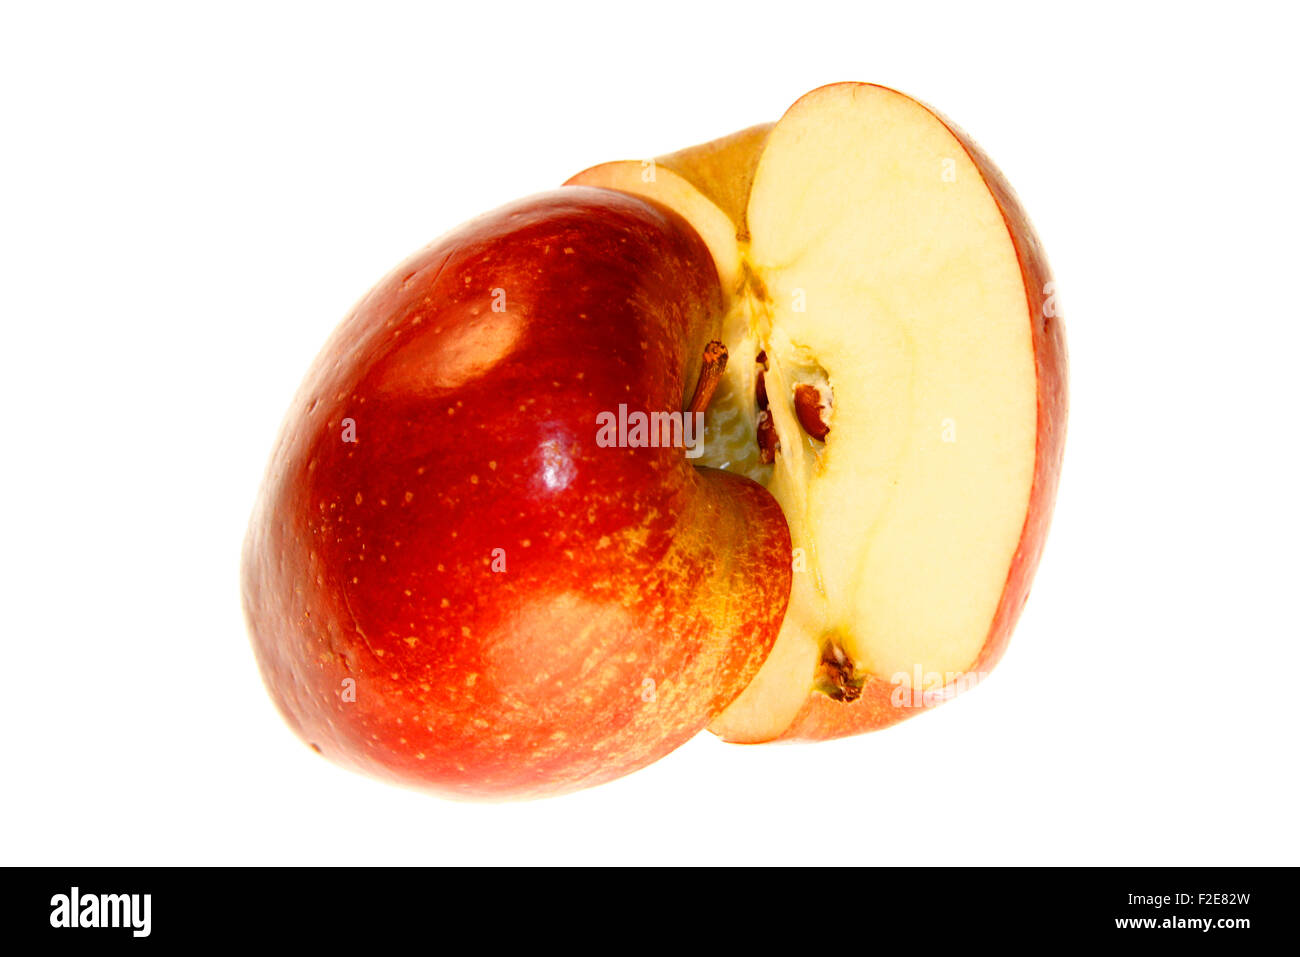 Apfel - Symbolbild Nahrungsmittel. Stock Photo